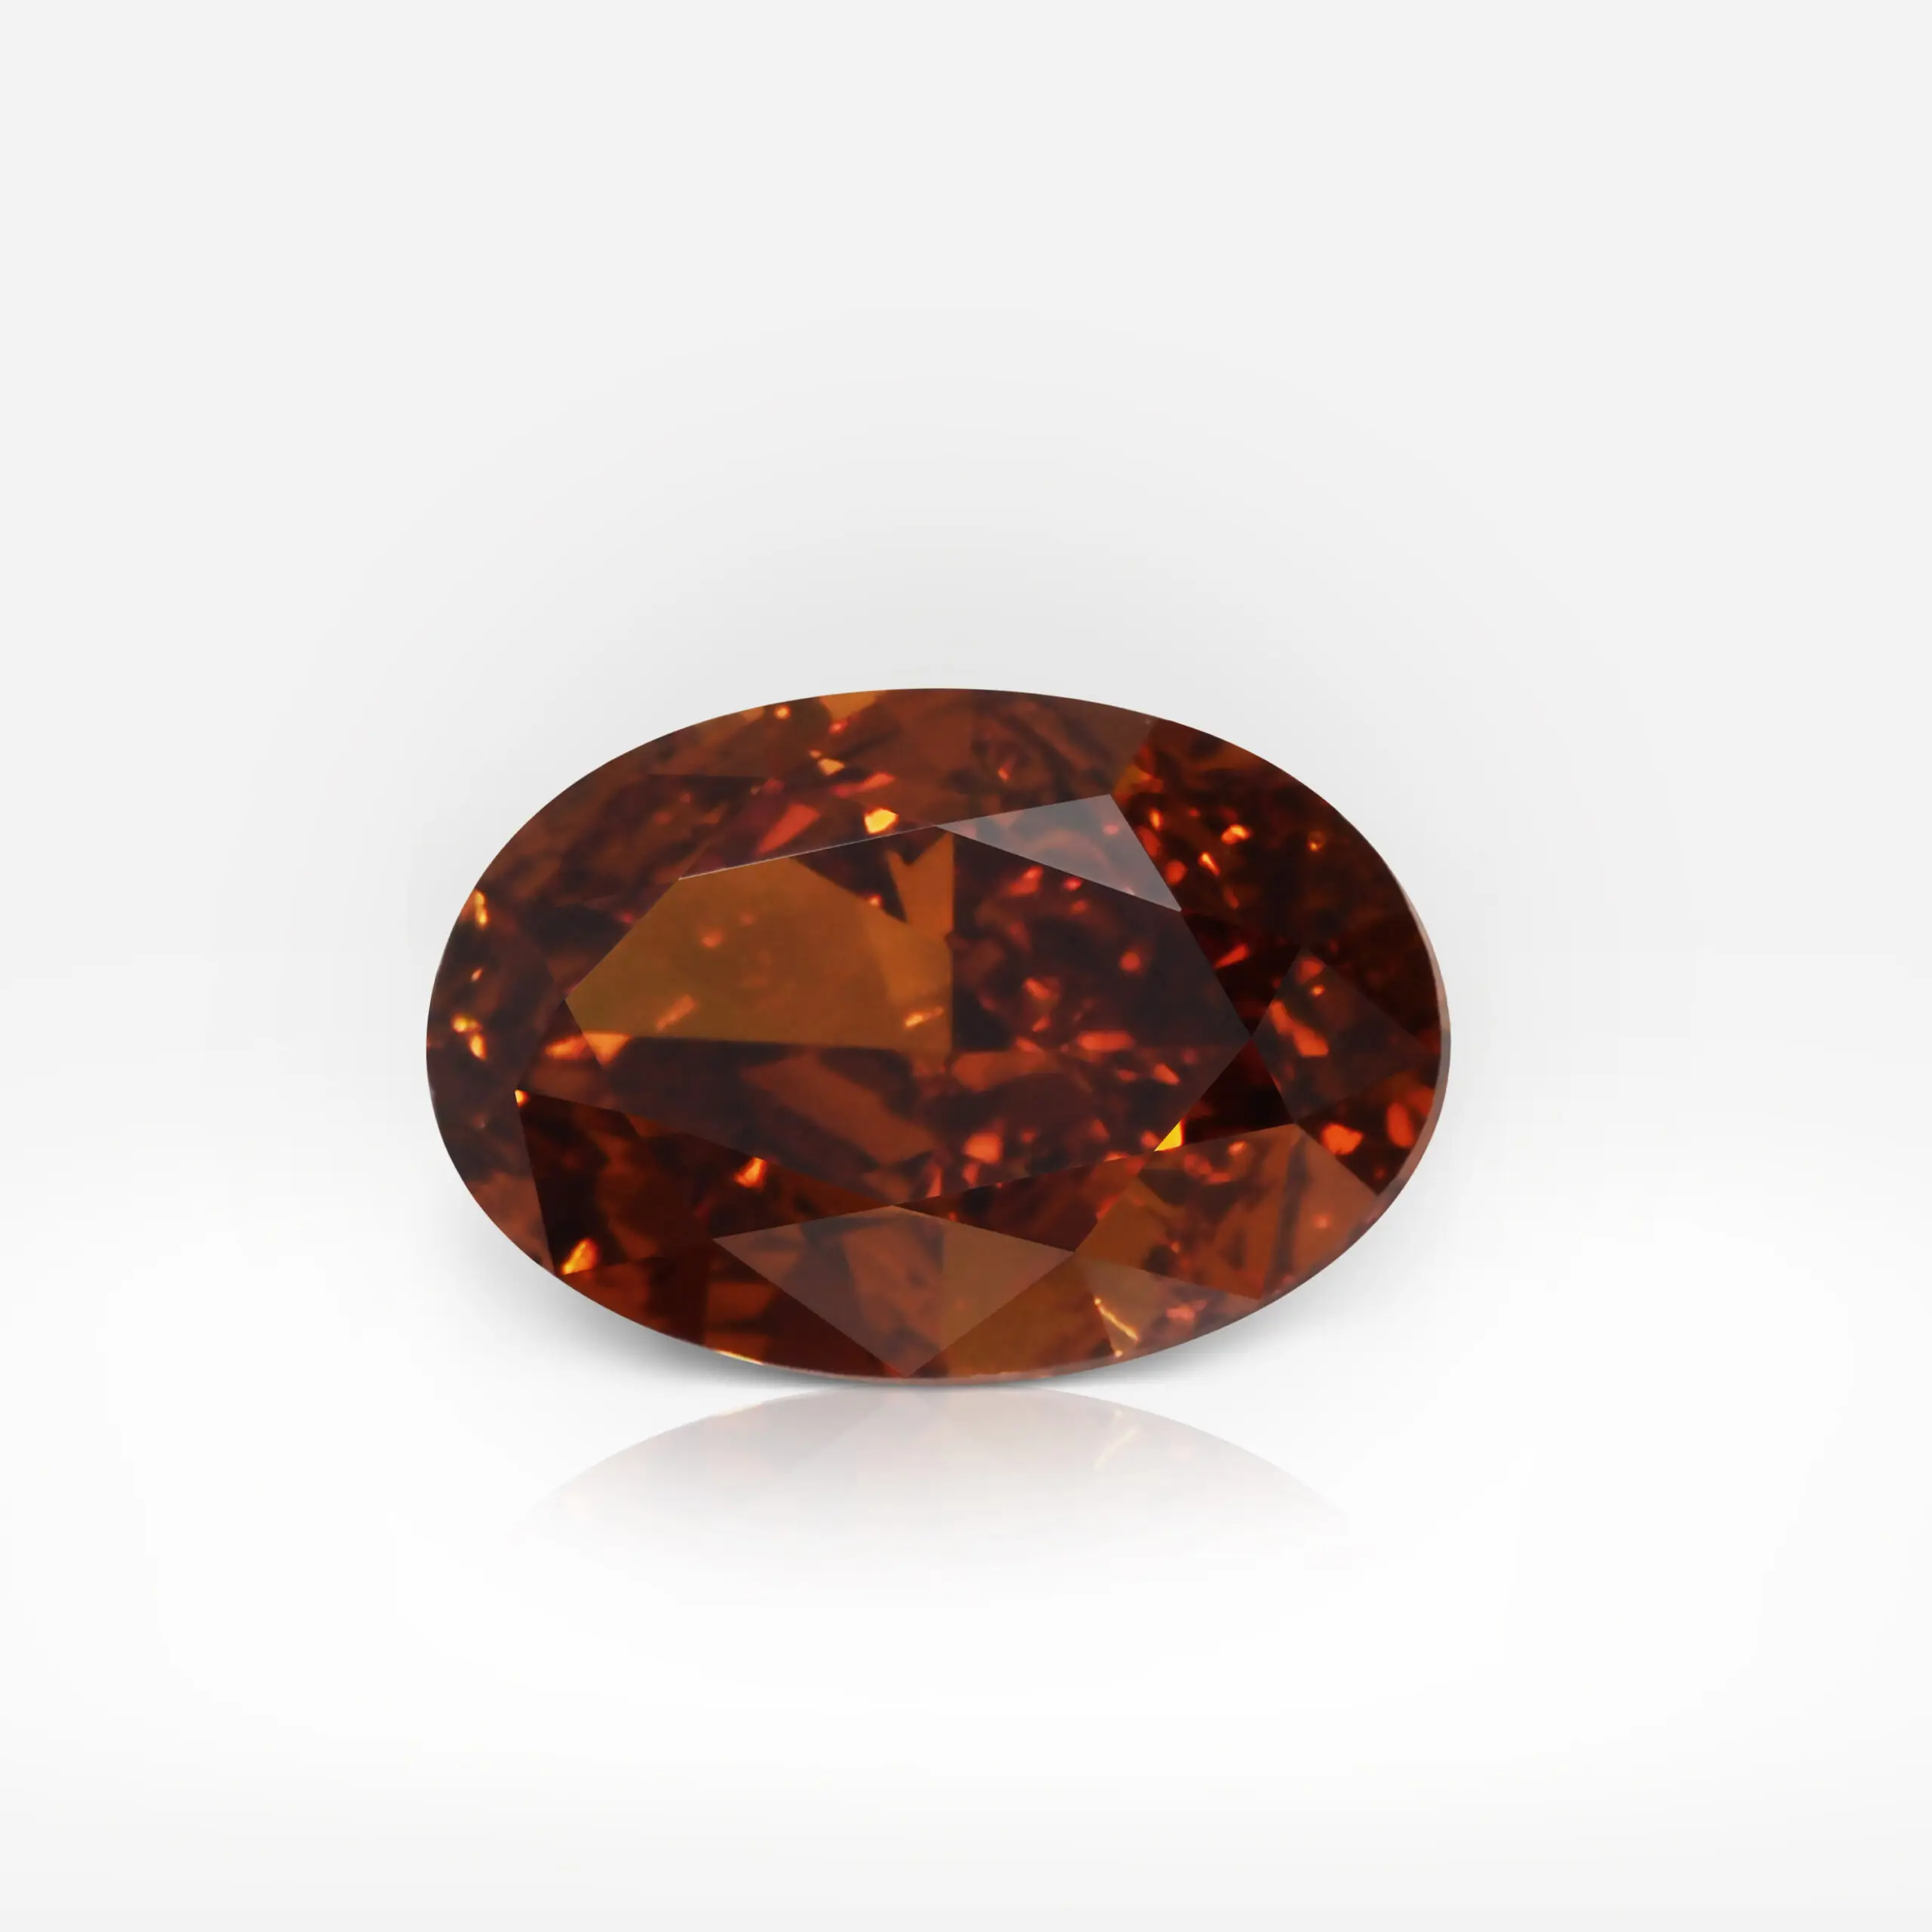 0.62 carat Fancy Deep Brownish Orange SI2 Oval Shape Diamond - picture 1